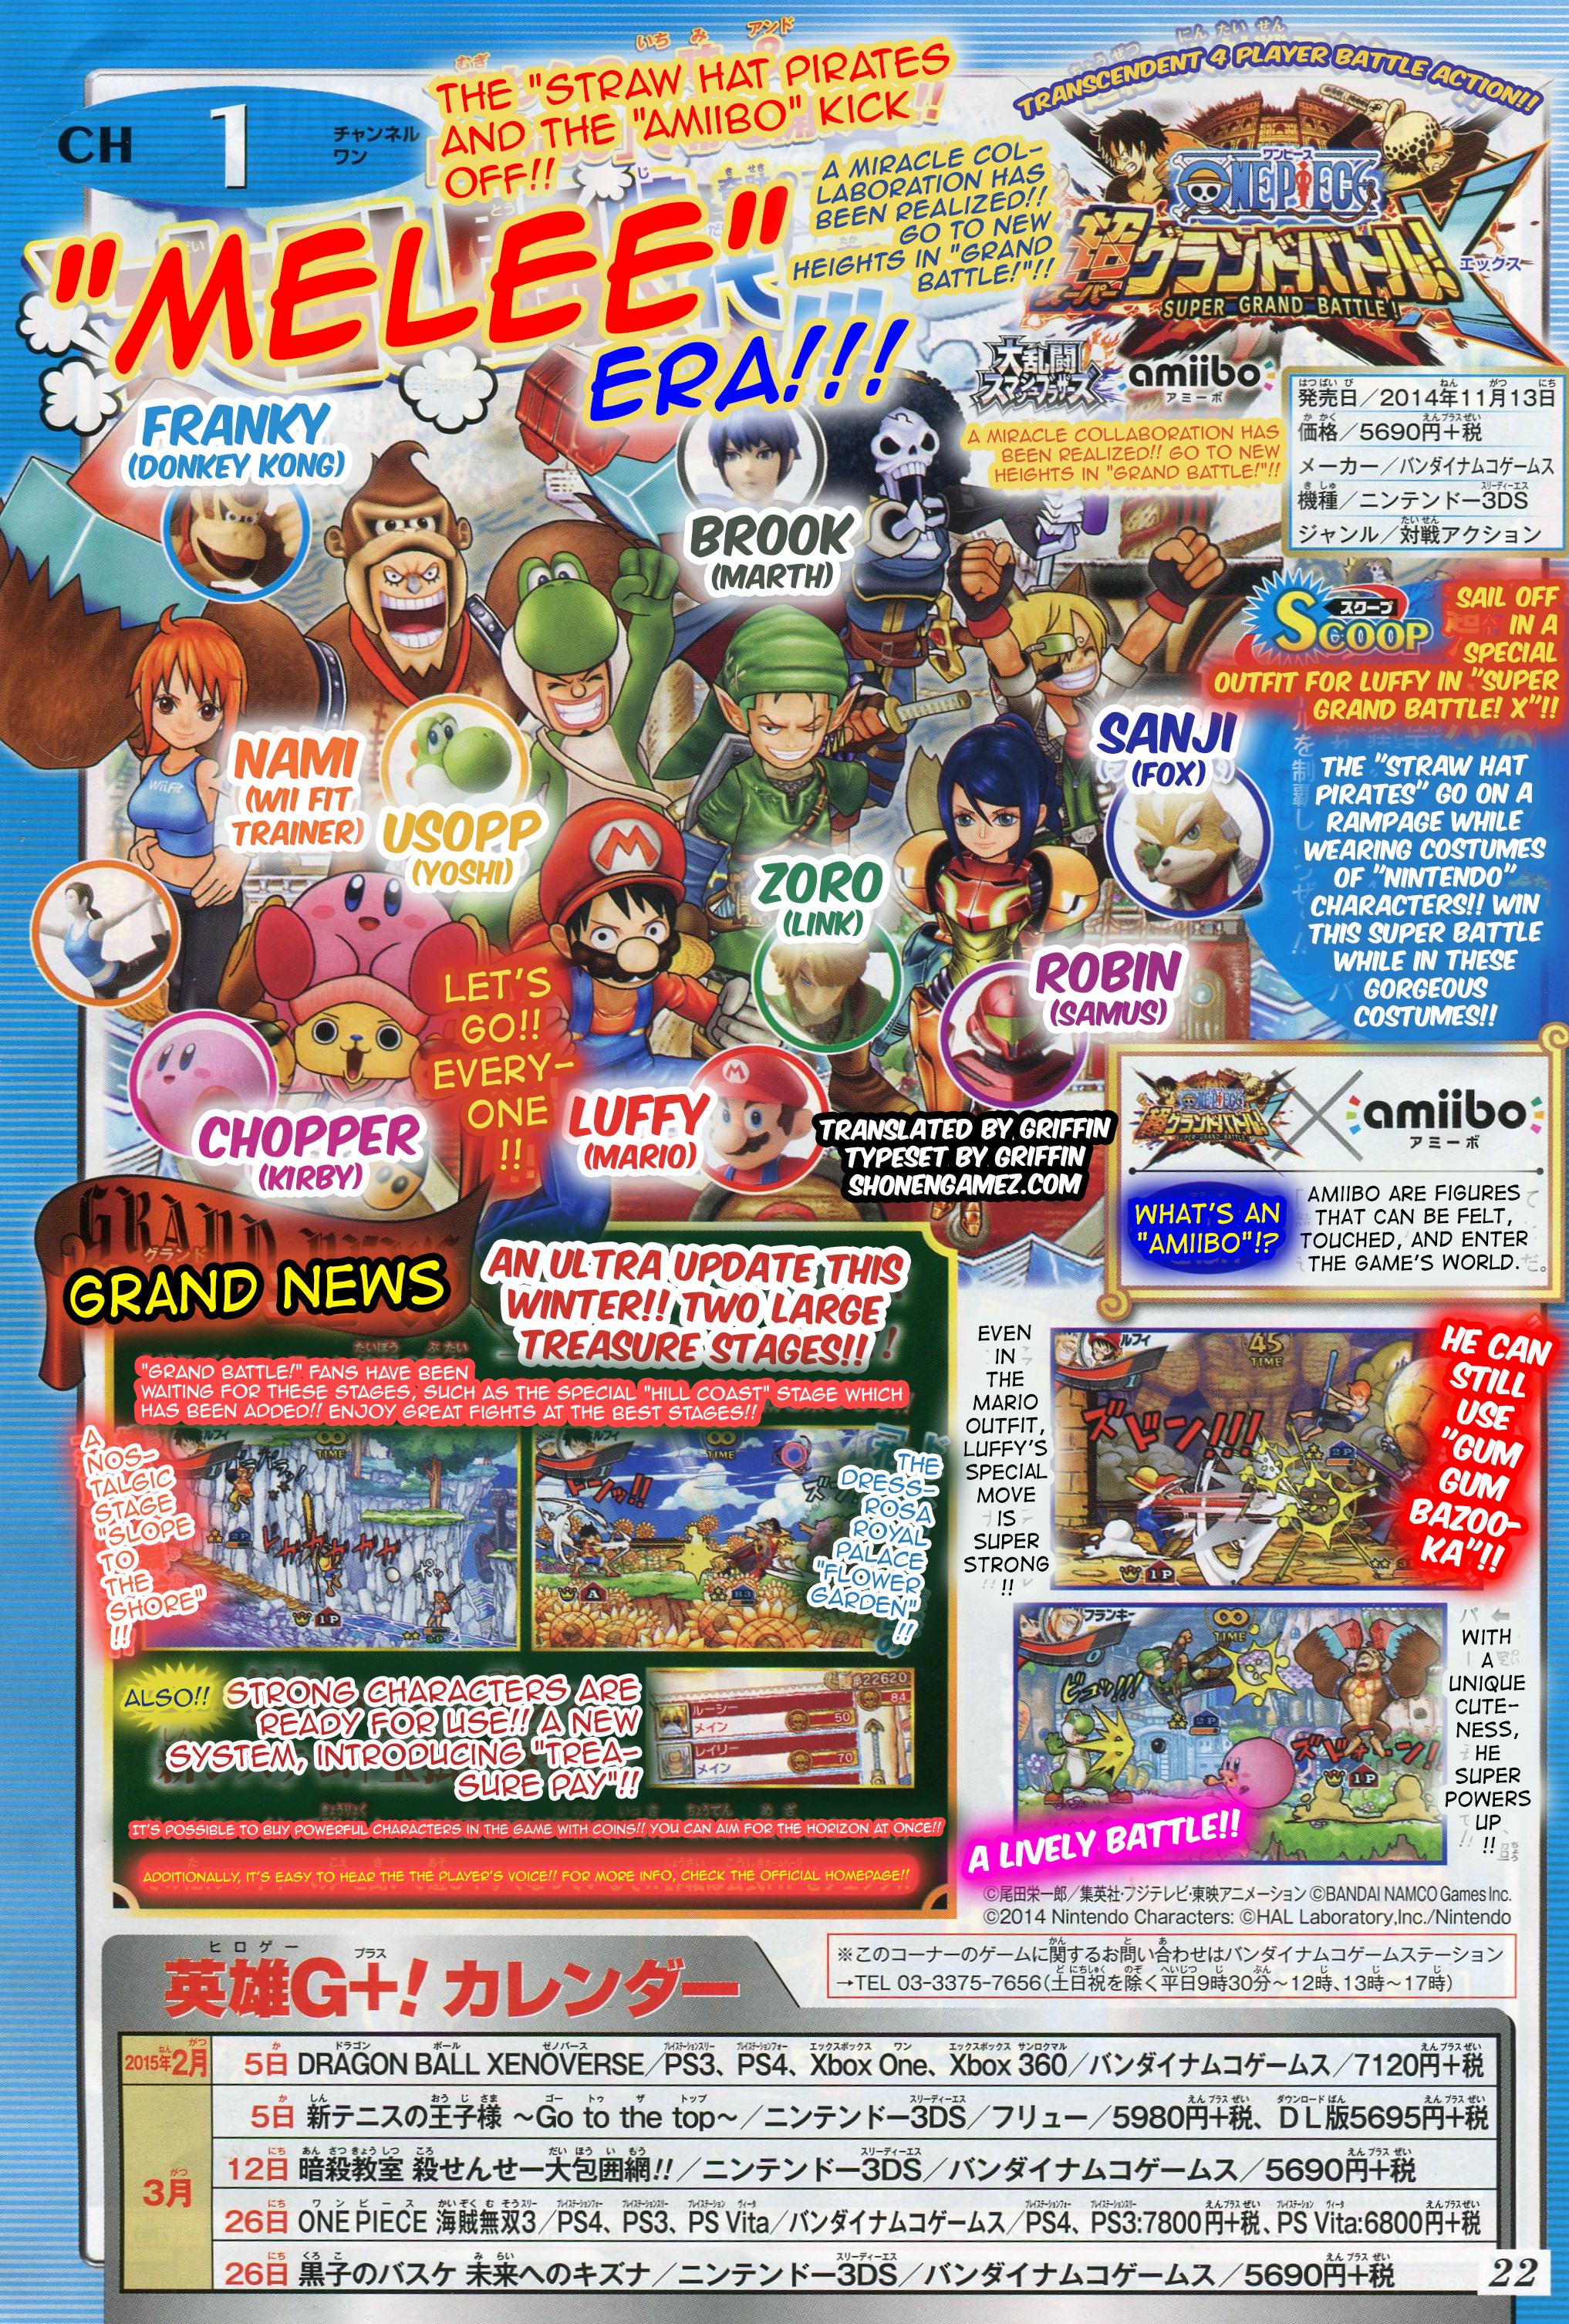 One Piece: Super Grand Battle! X, Nintendo